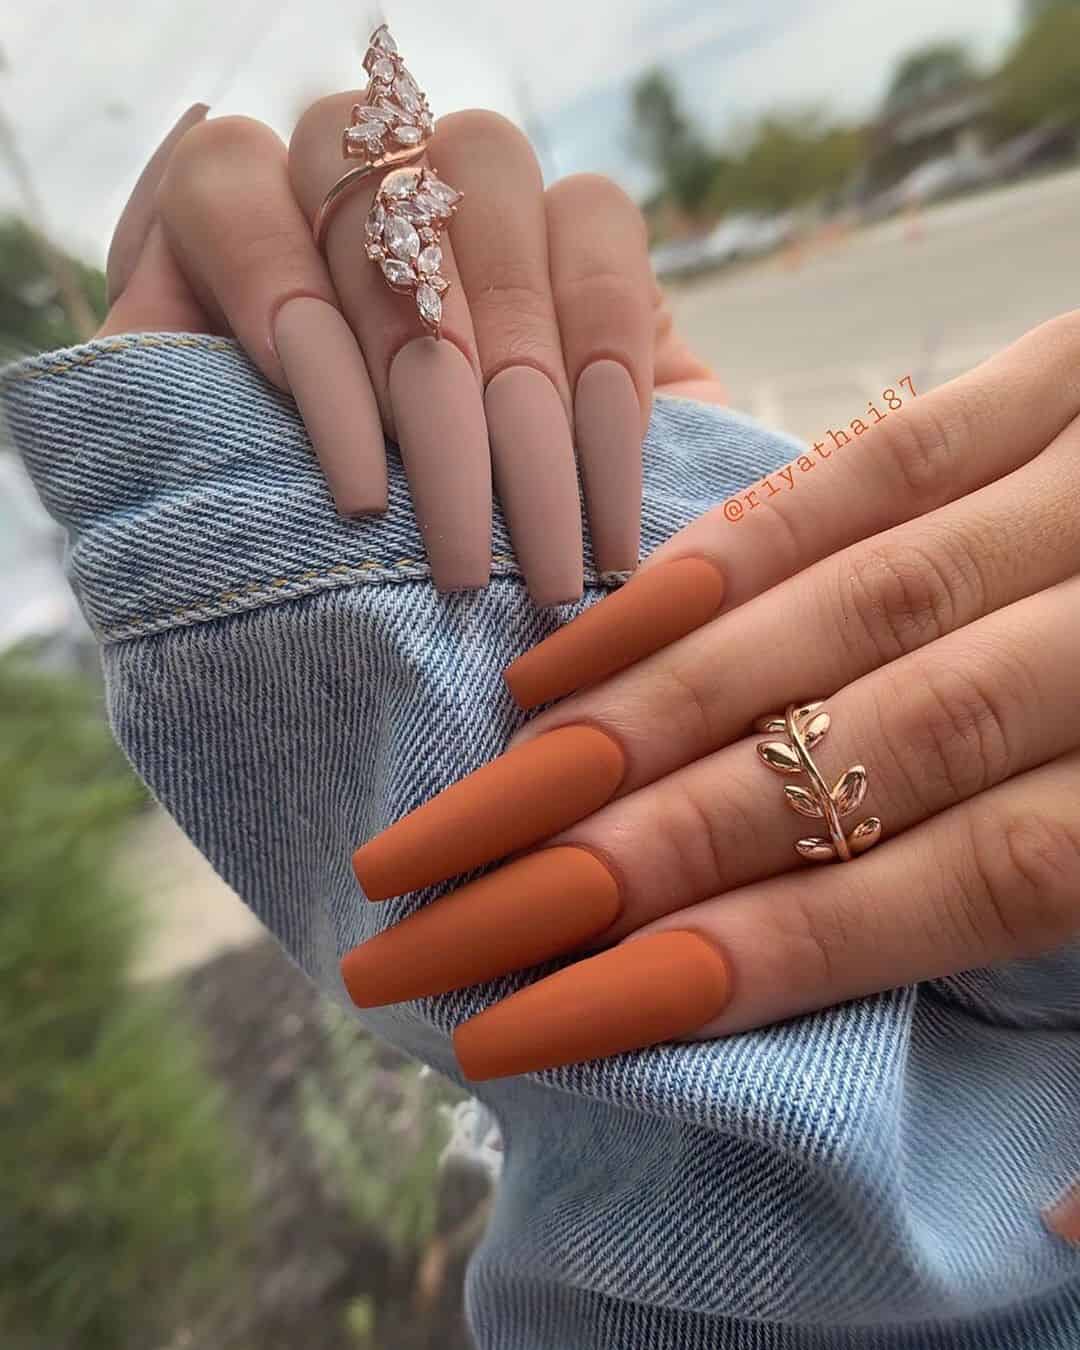 orange fall nails